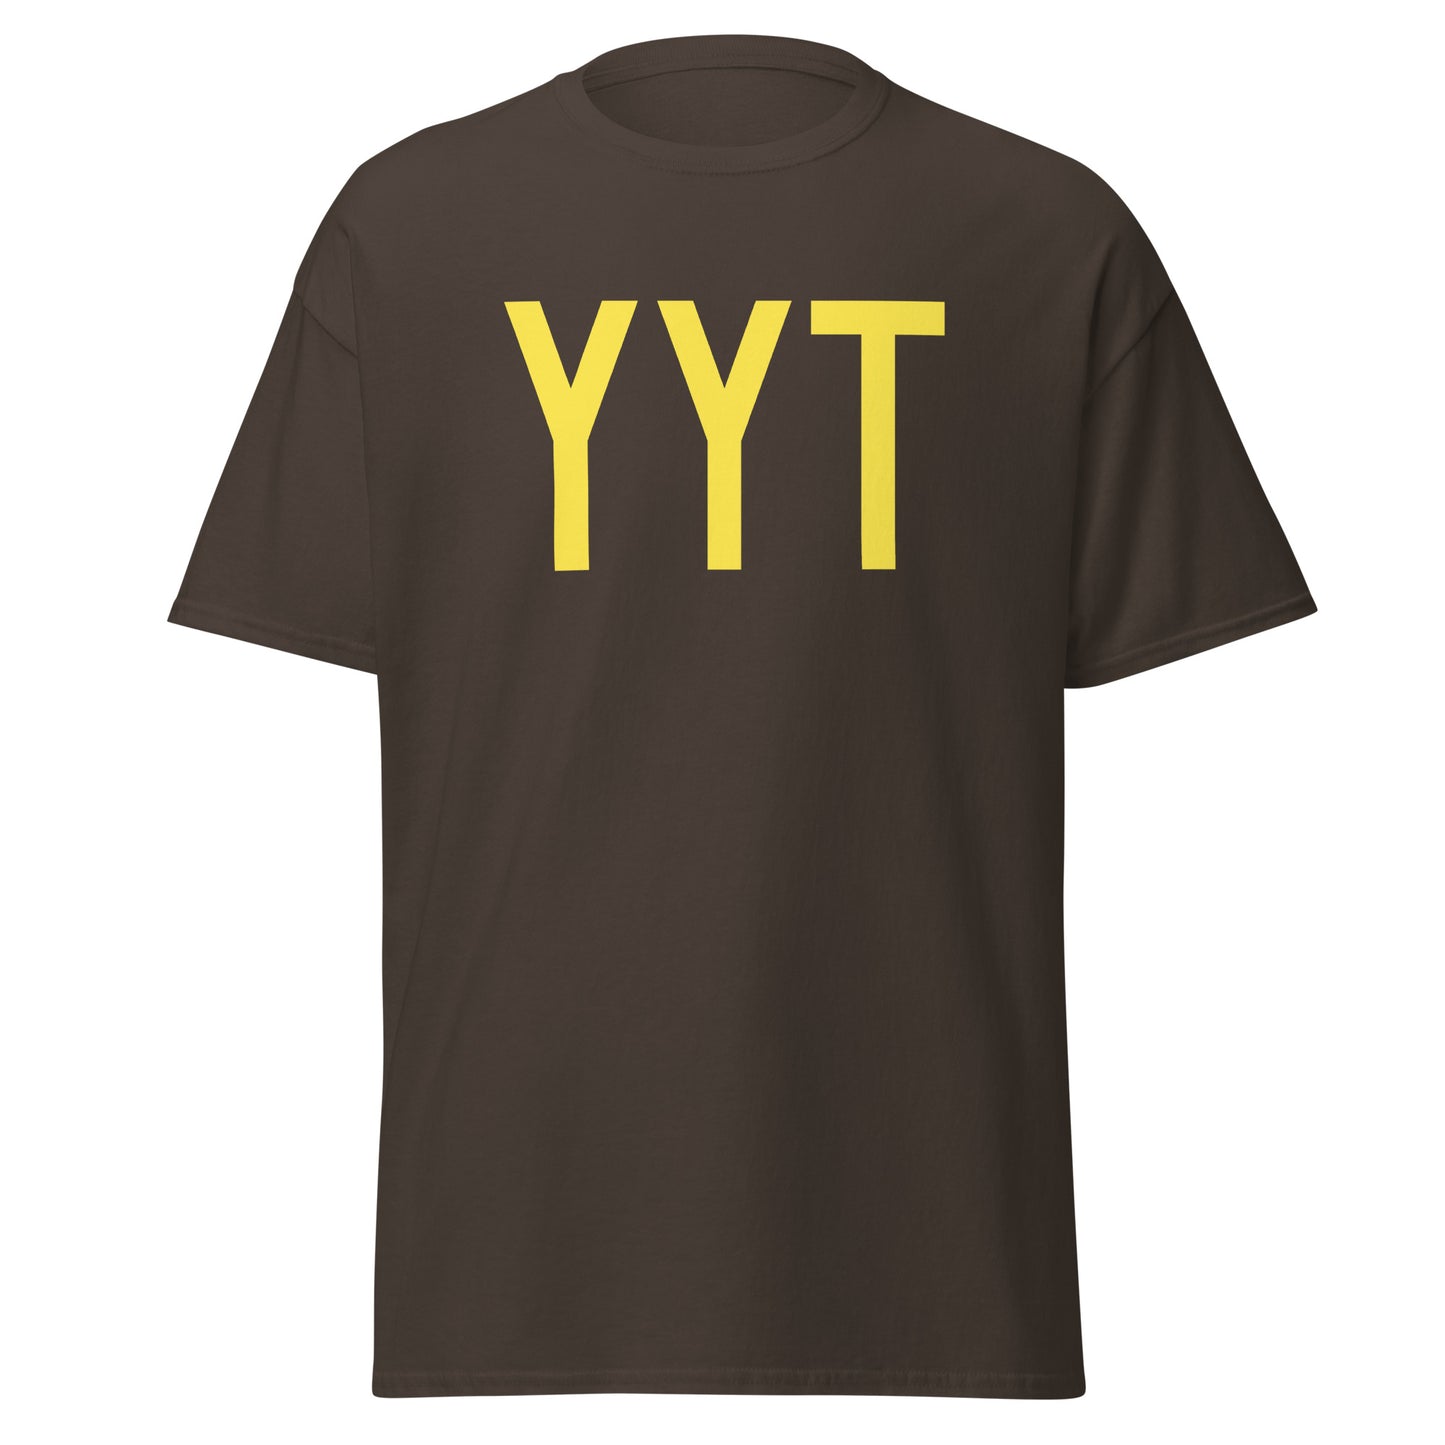 Aviation-Theme Men's T-Shirt - Yellow Graphic • YYT St. John's • YHM Designs - Image 05